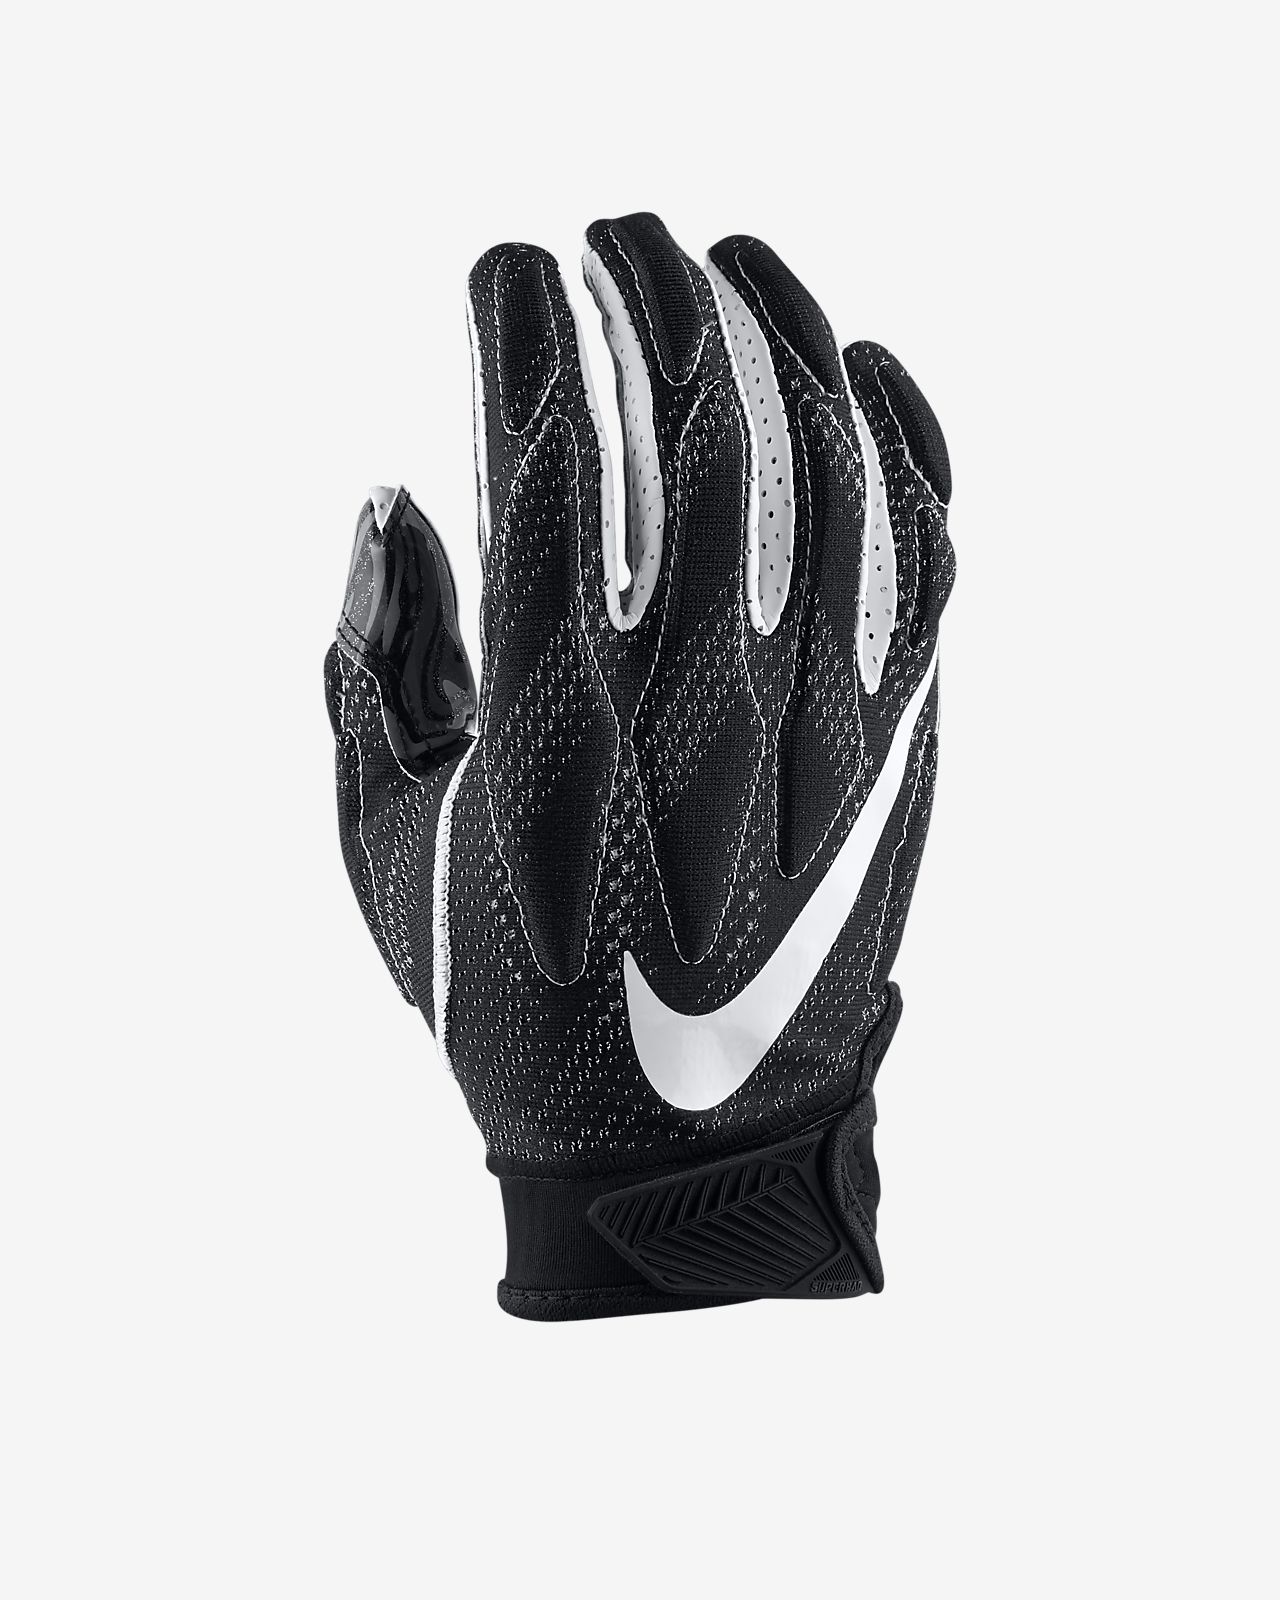 Nike Football Gloves Size Chart